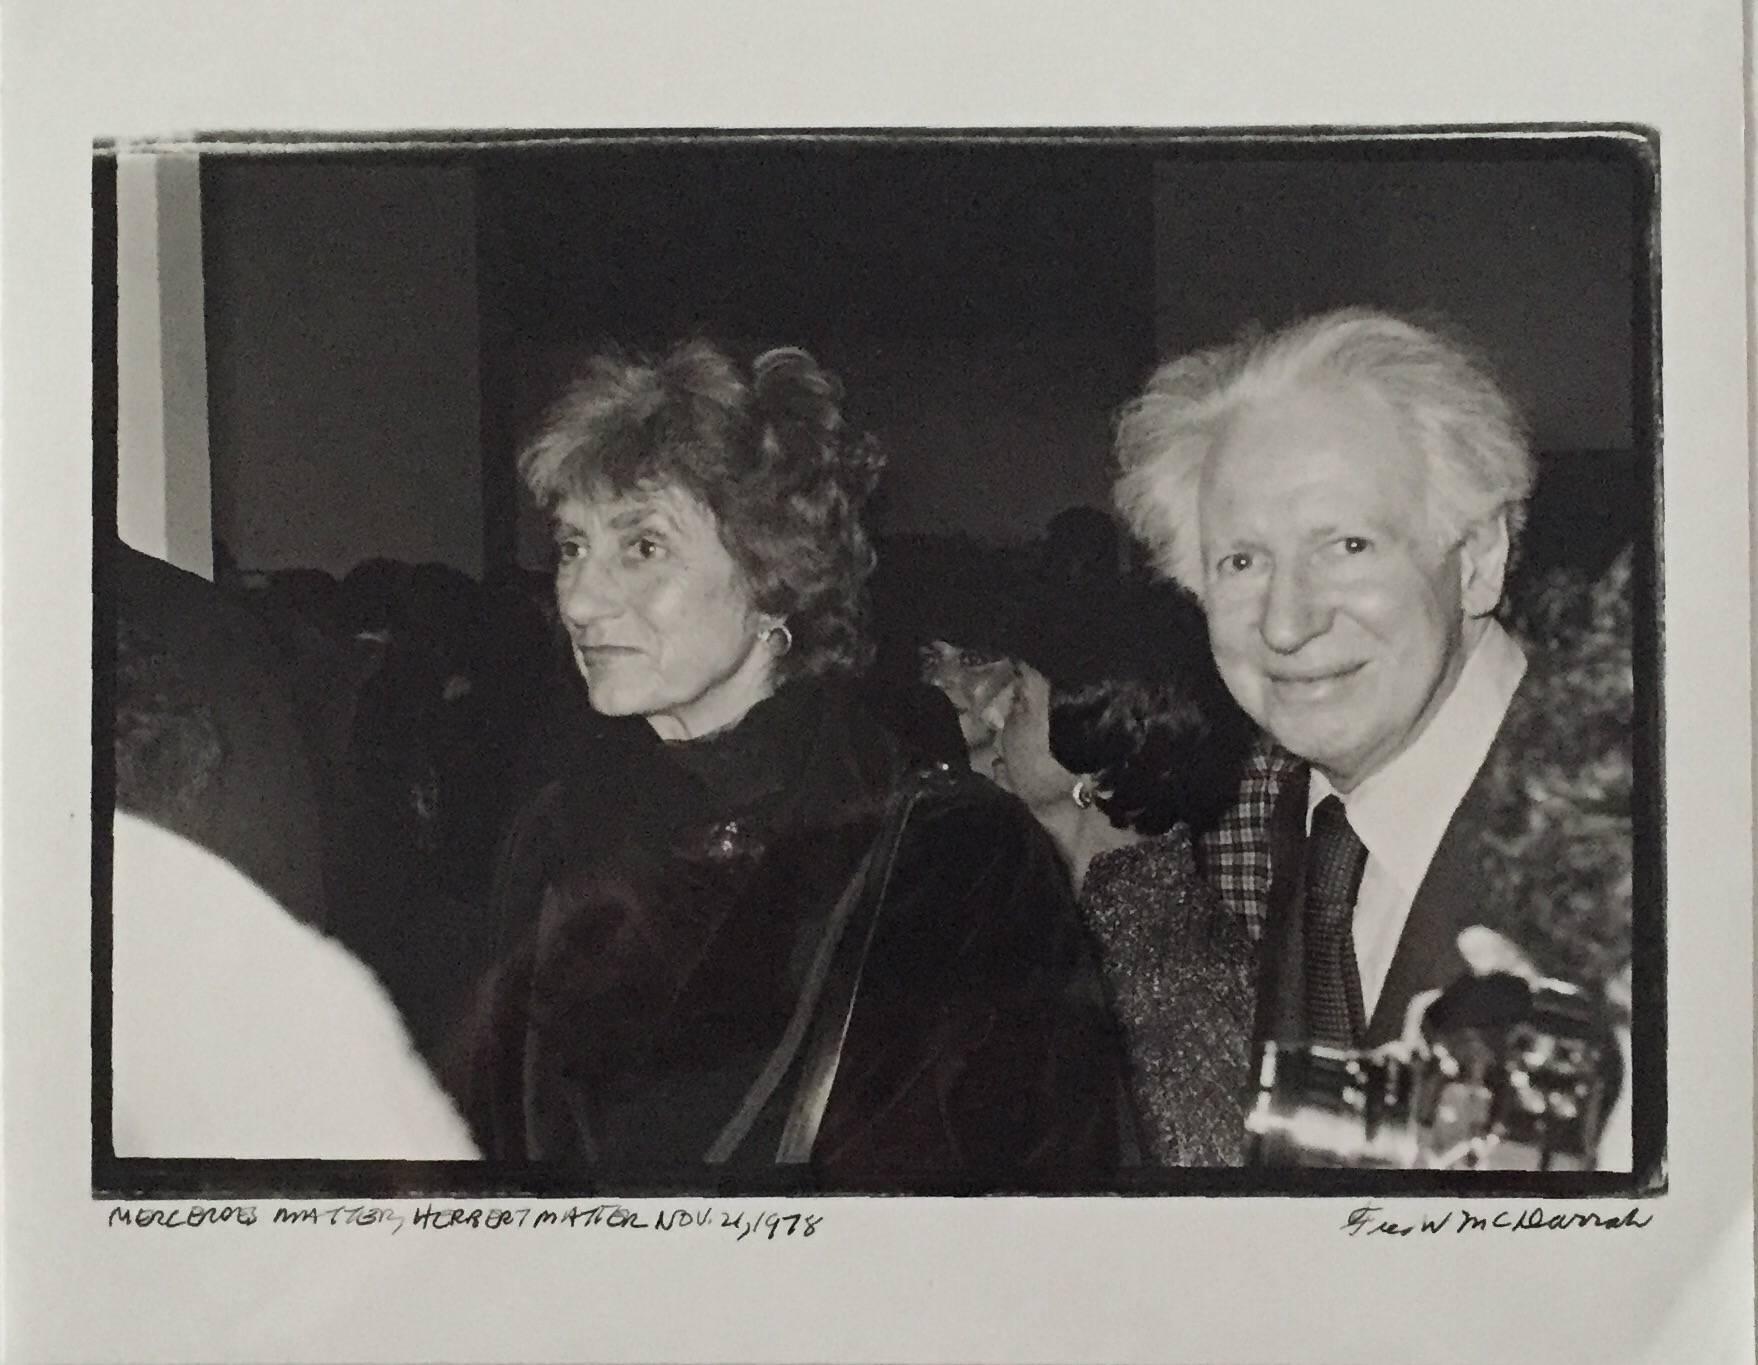 Black and White Photograph Fred McDarrah - Herbert et Mercedes Matter